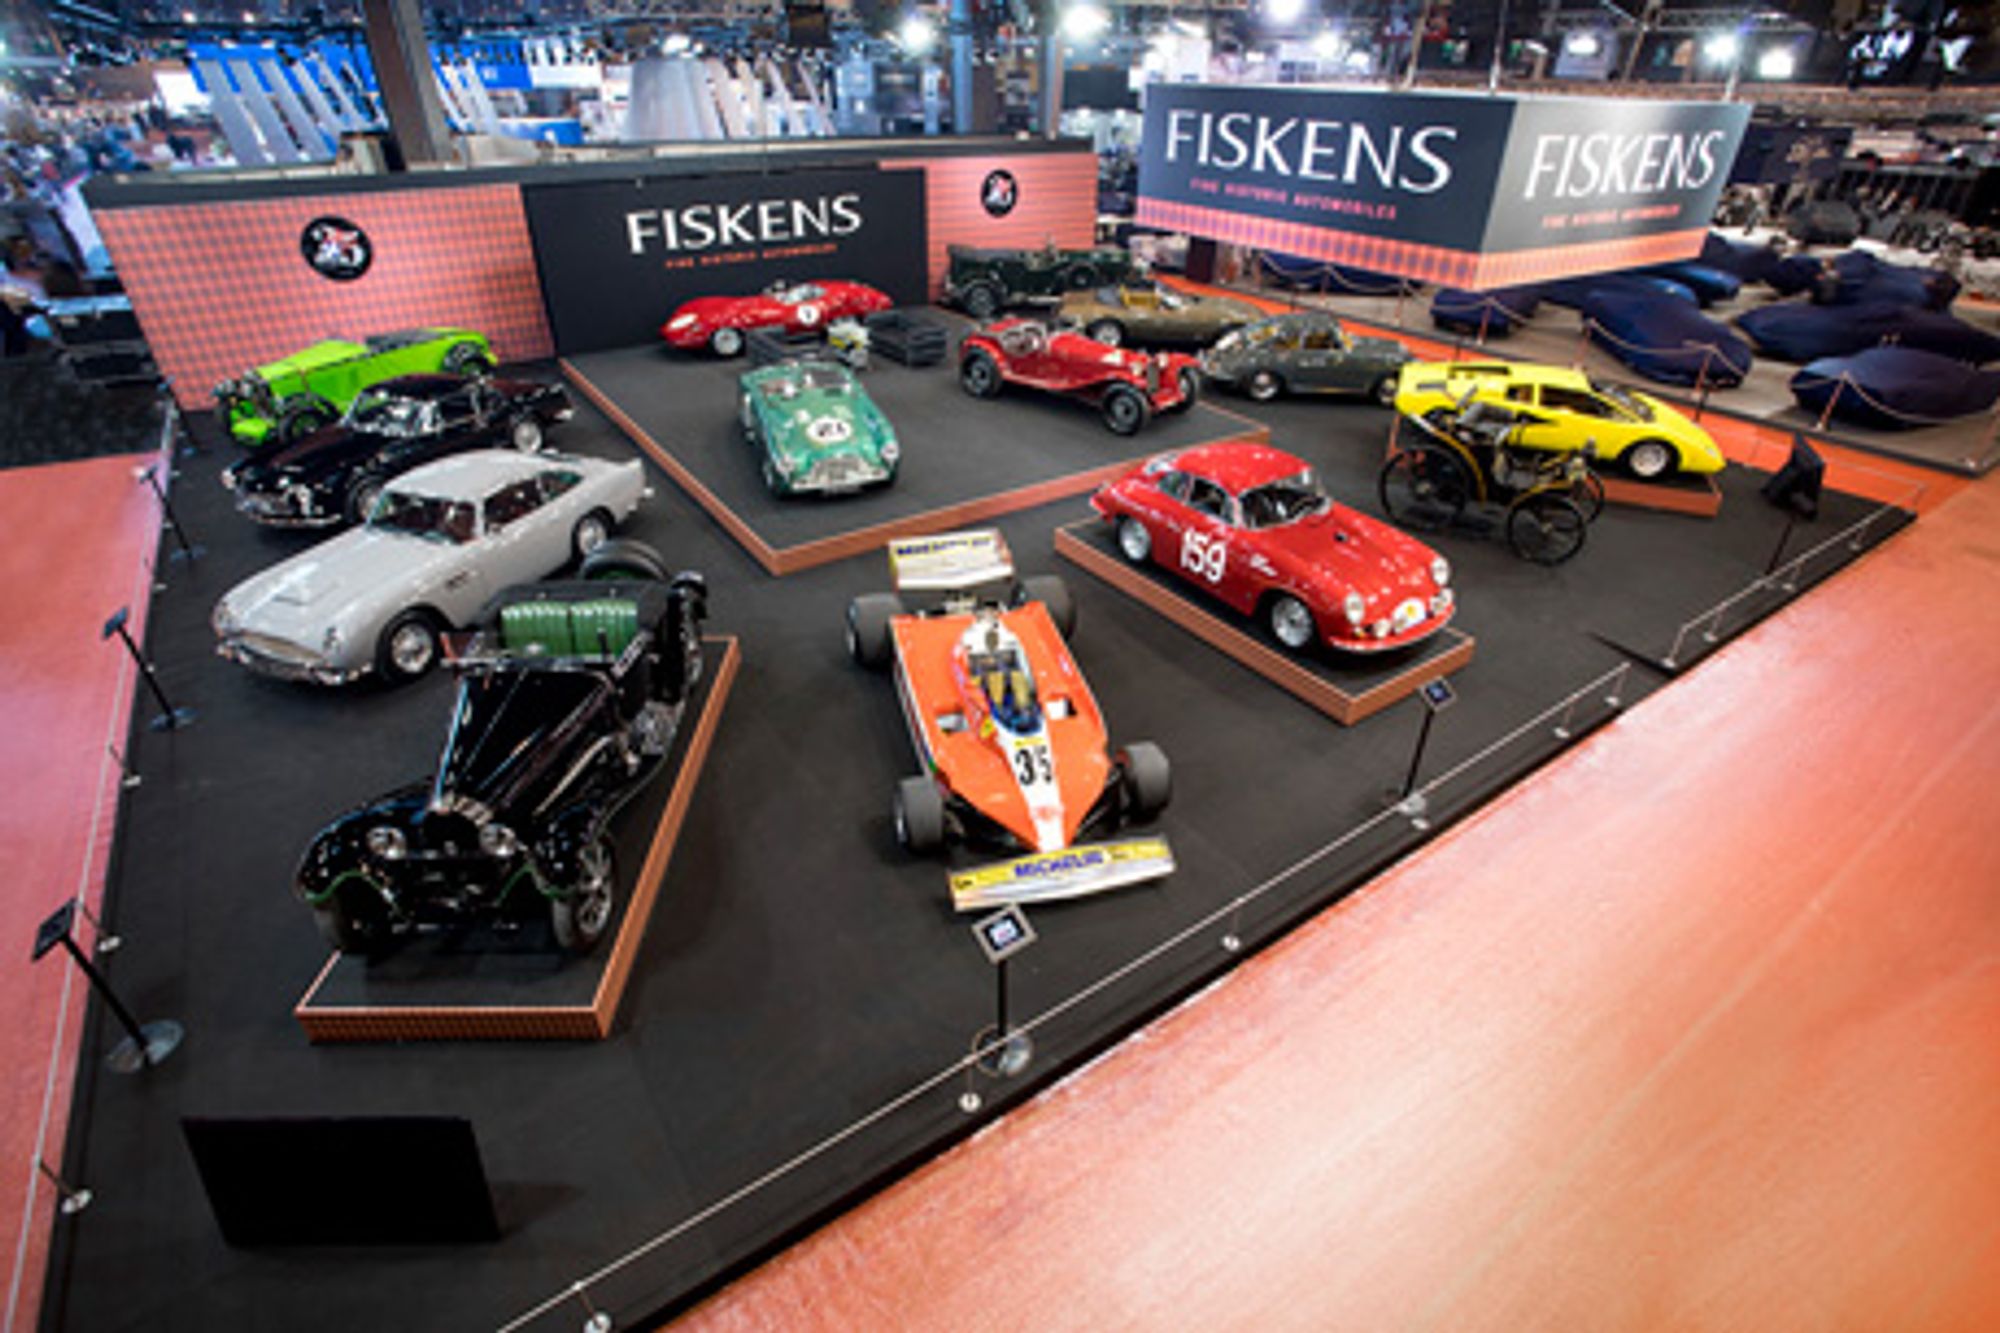 Fiskens unveils 25th anniversary Rétromobile collection